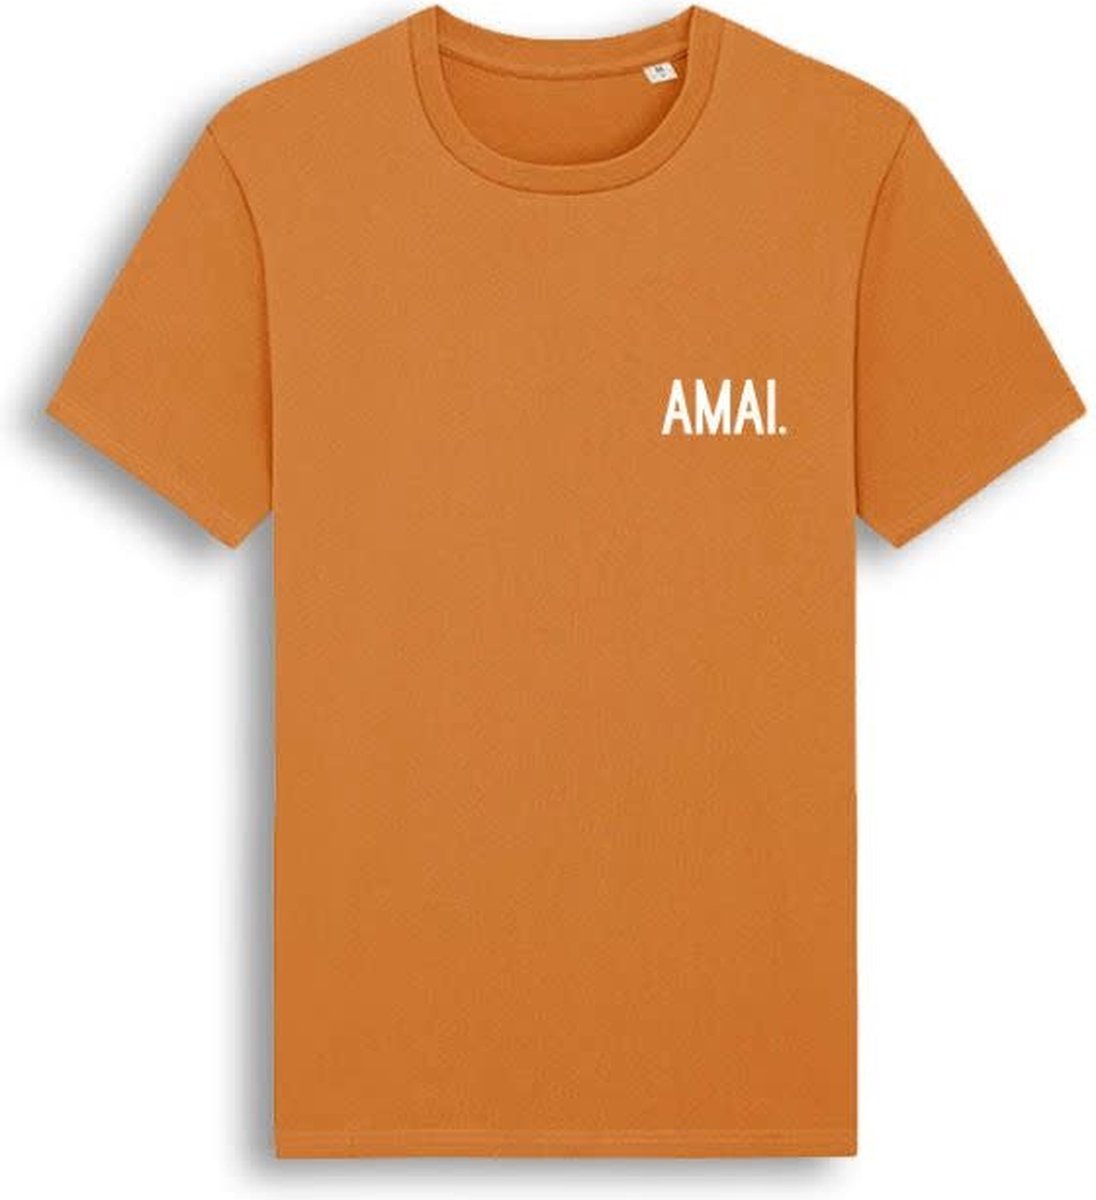 AMAI. Oranje T-shirt met opdruk.